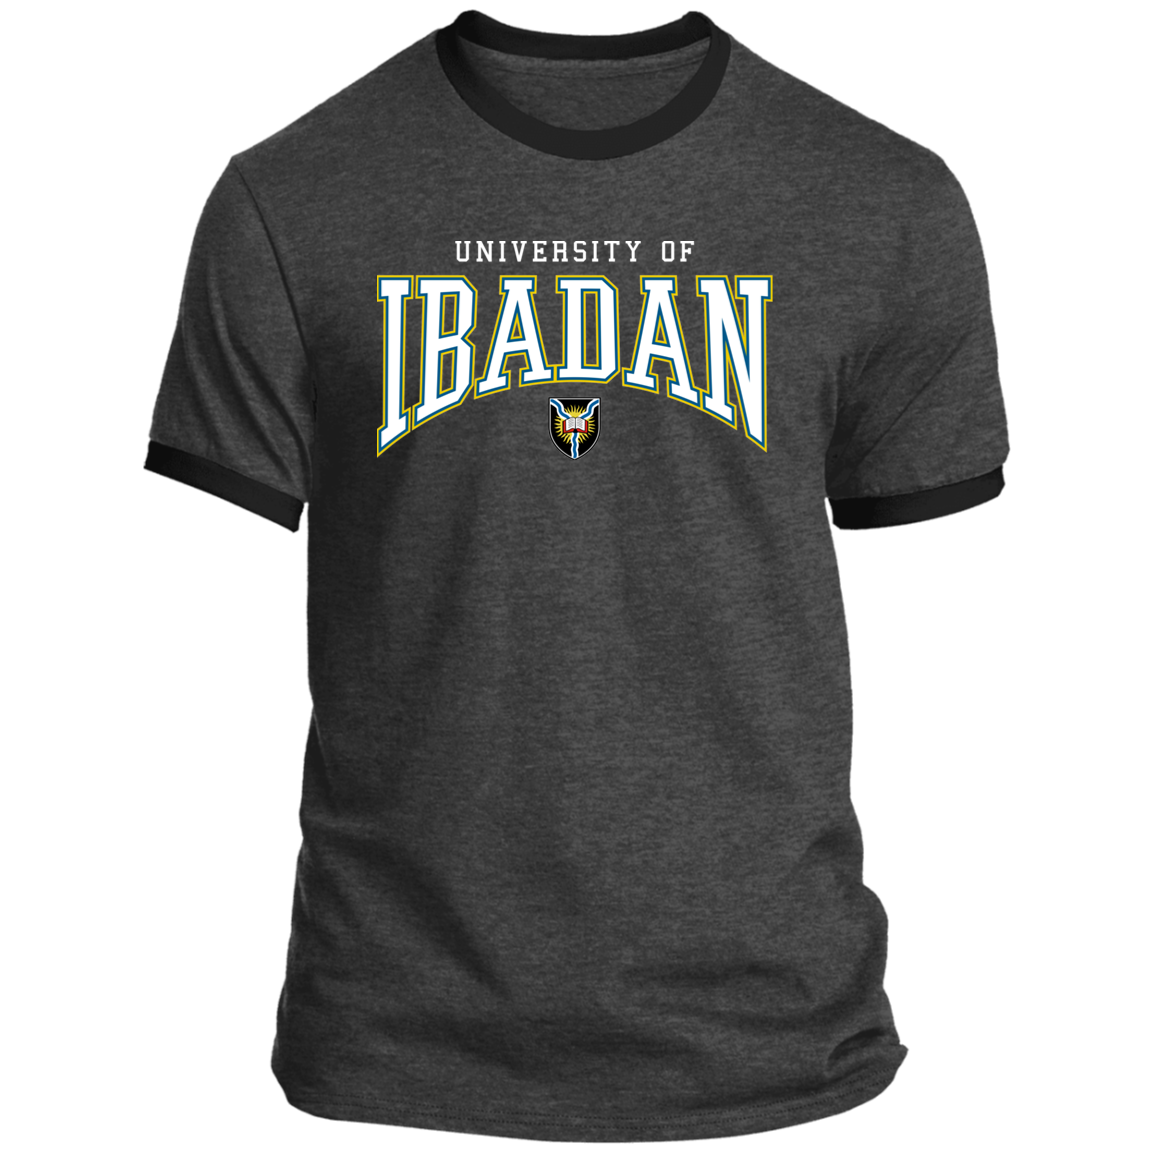 University of Ibadan (UI) Ringer T-Shirt (Unisex)